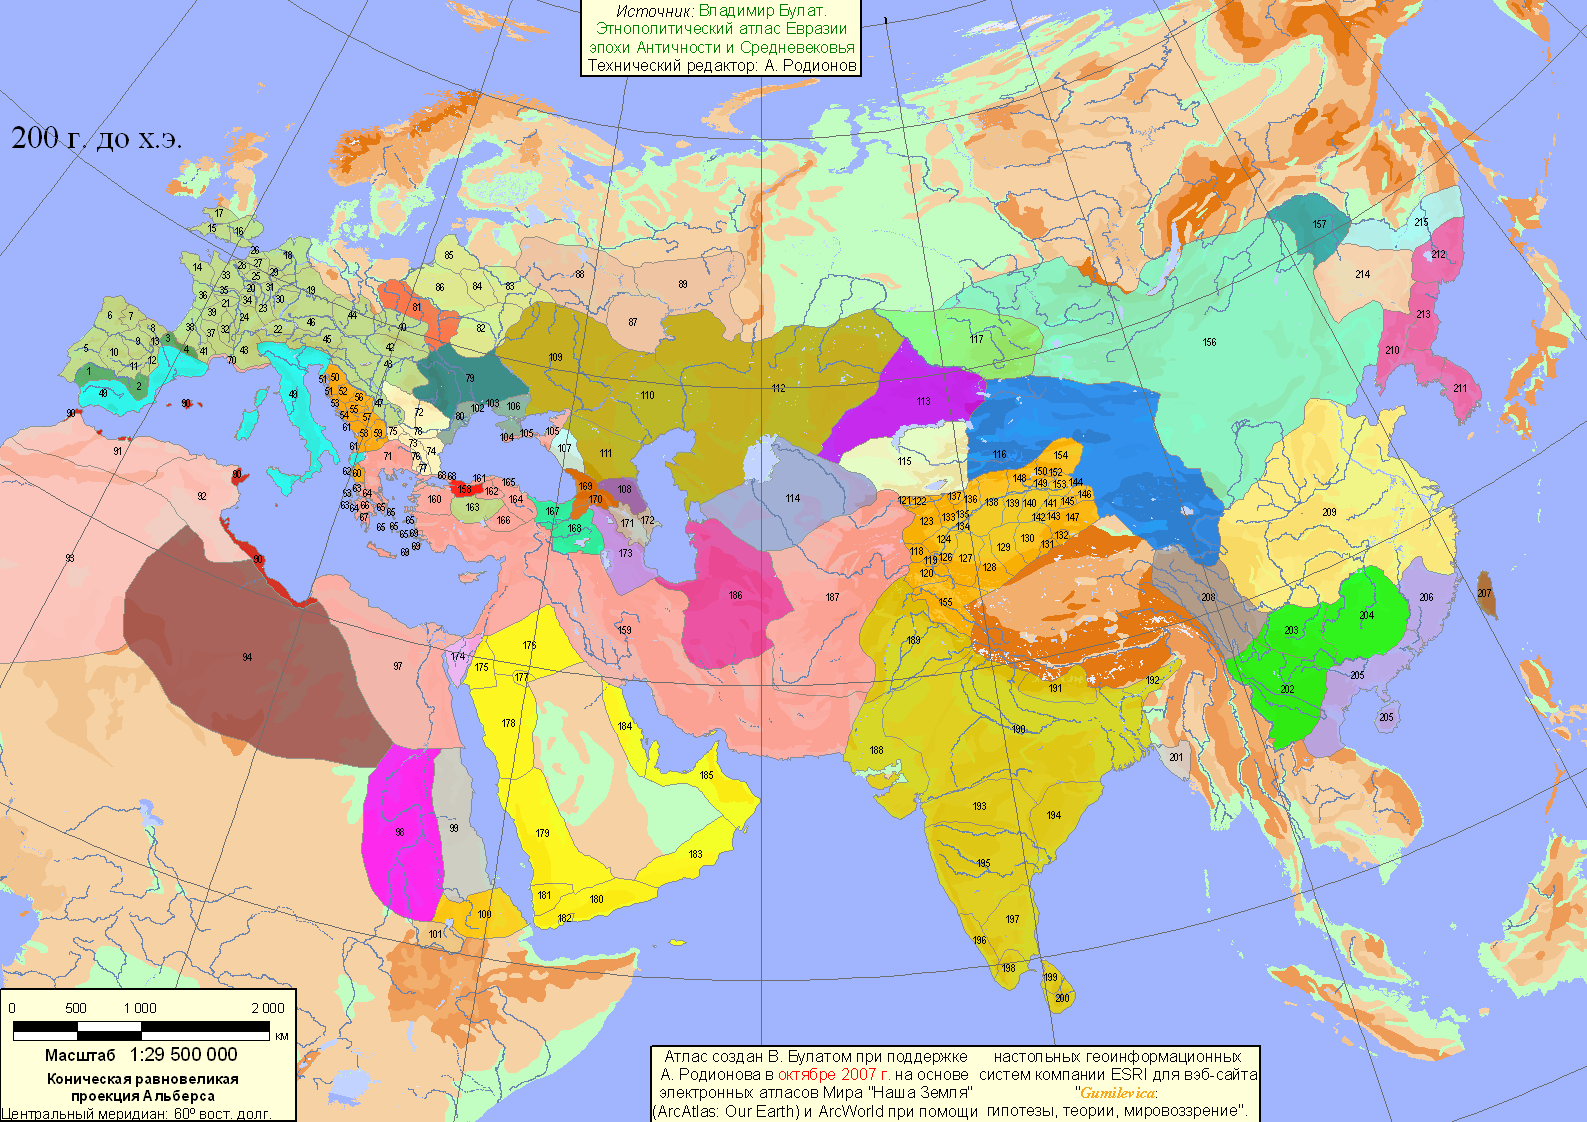 Eurasia - 200 BC (312 Kbytes)